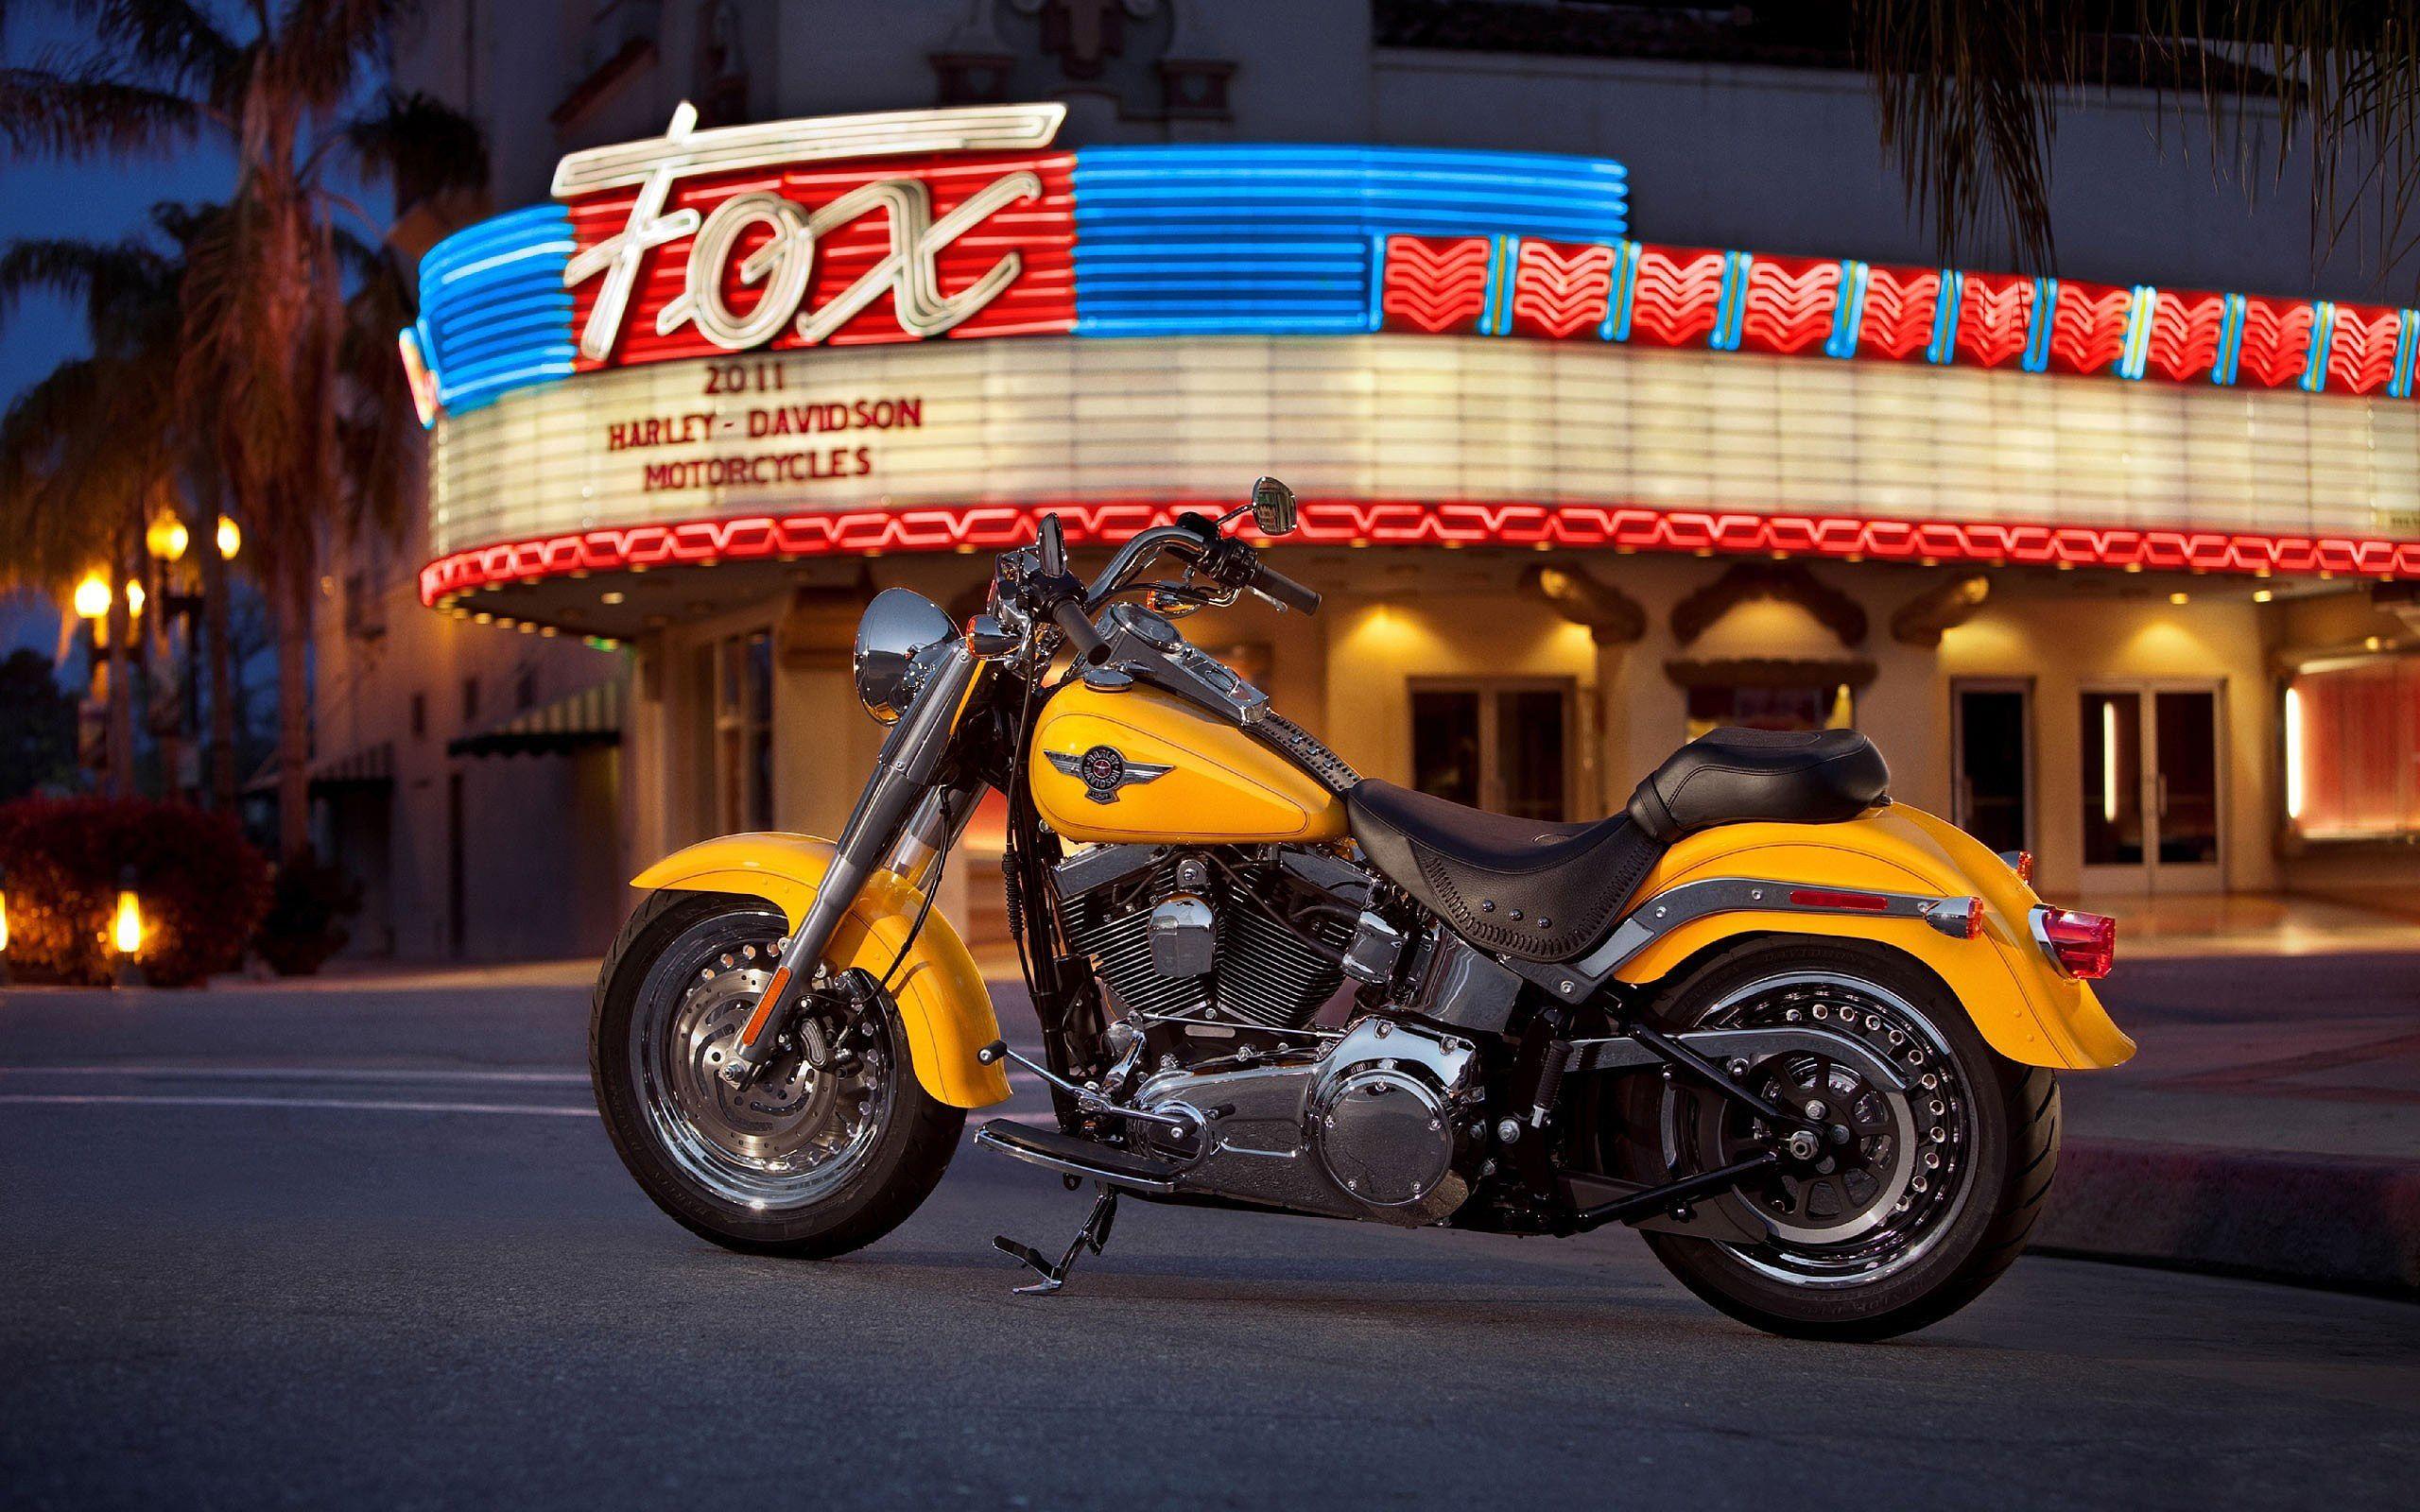 Yellow Harley Davidson Bike Wallpaper Background 60884 2560x1600 px